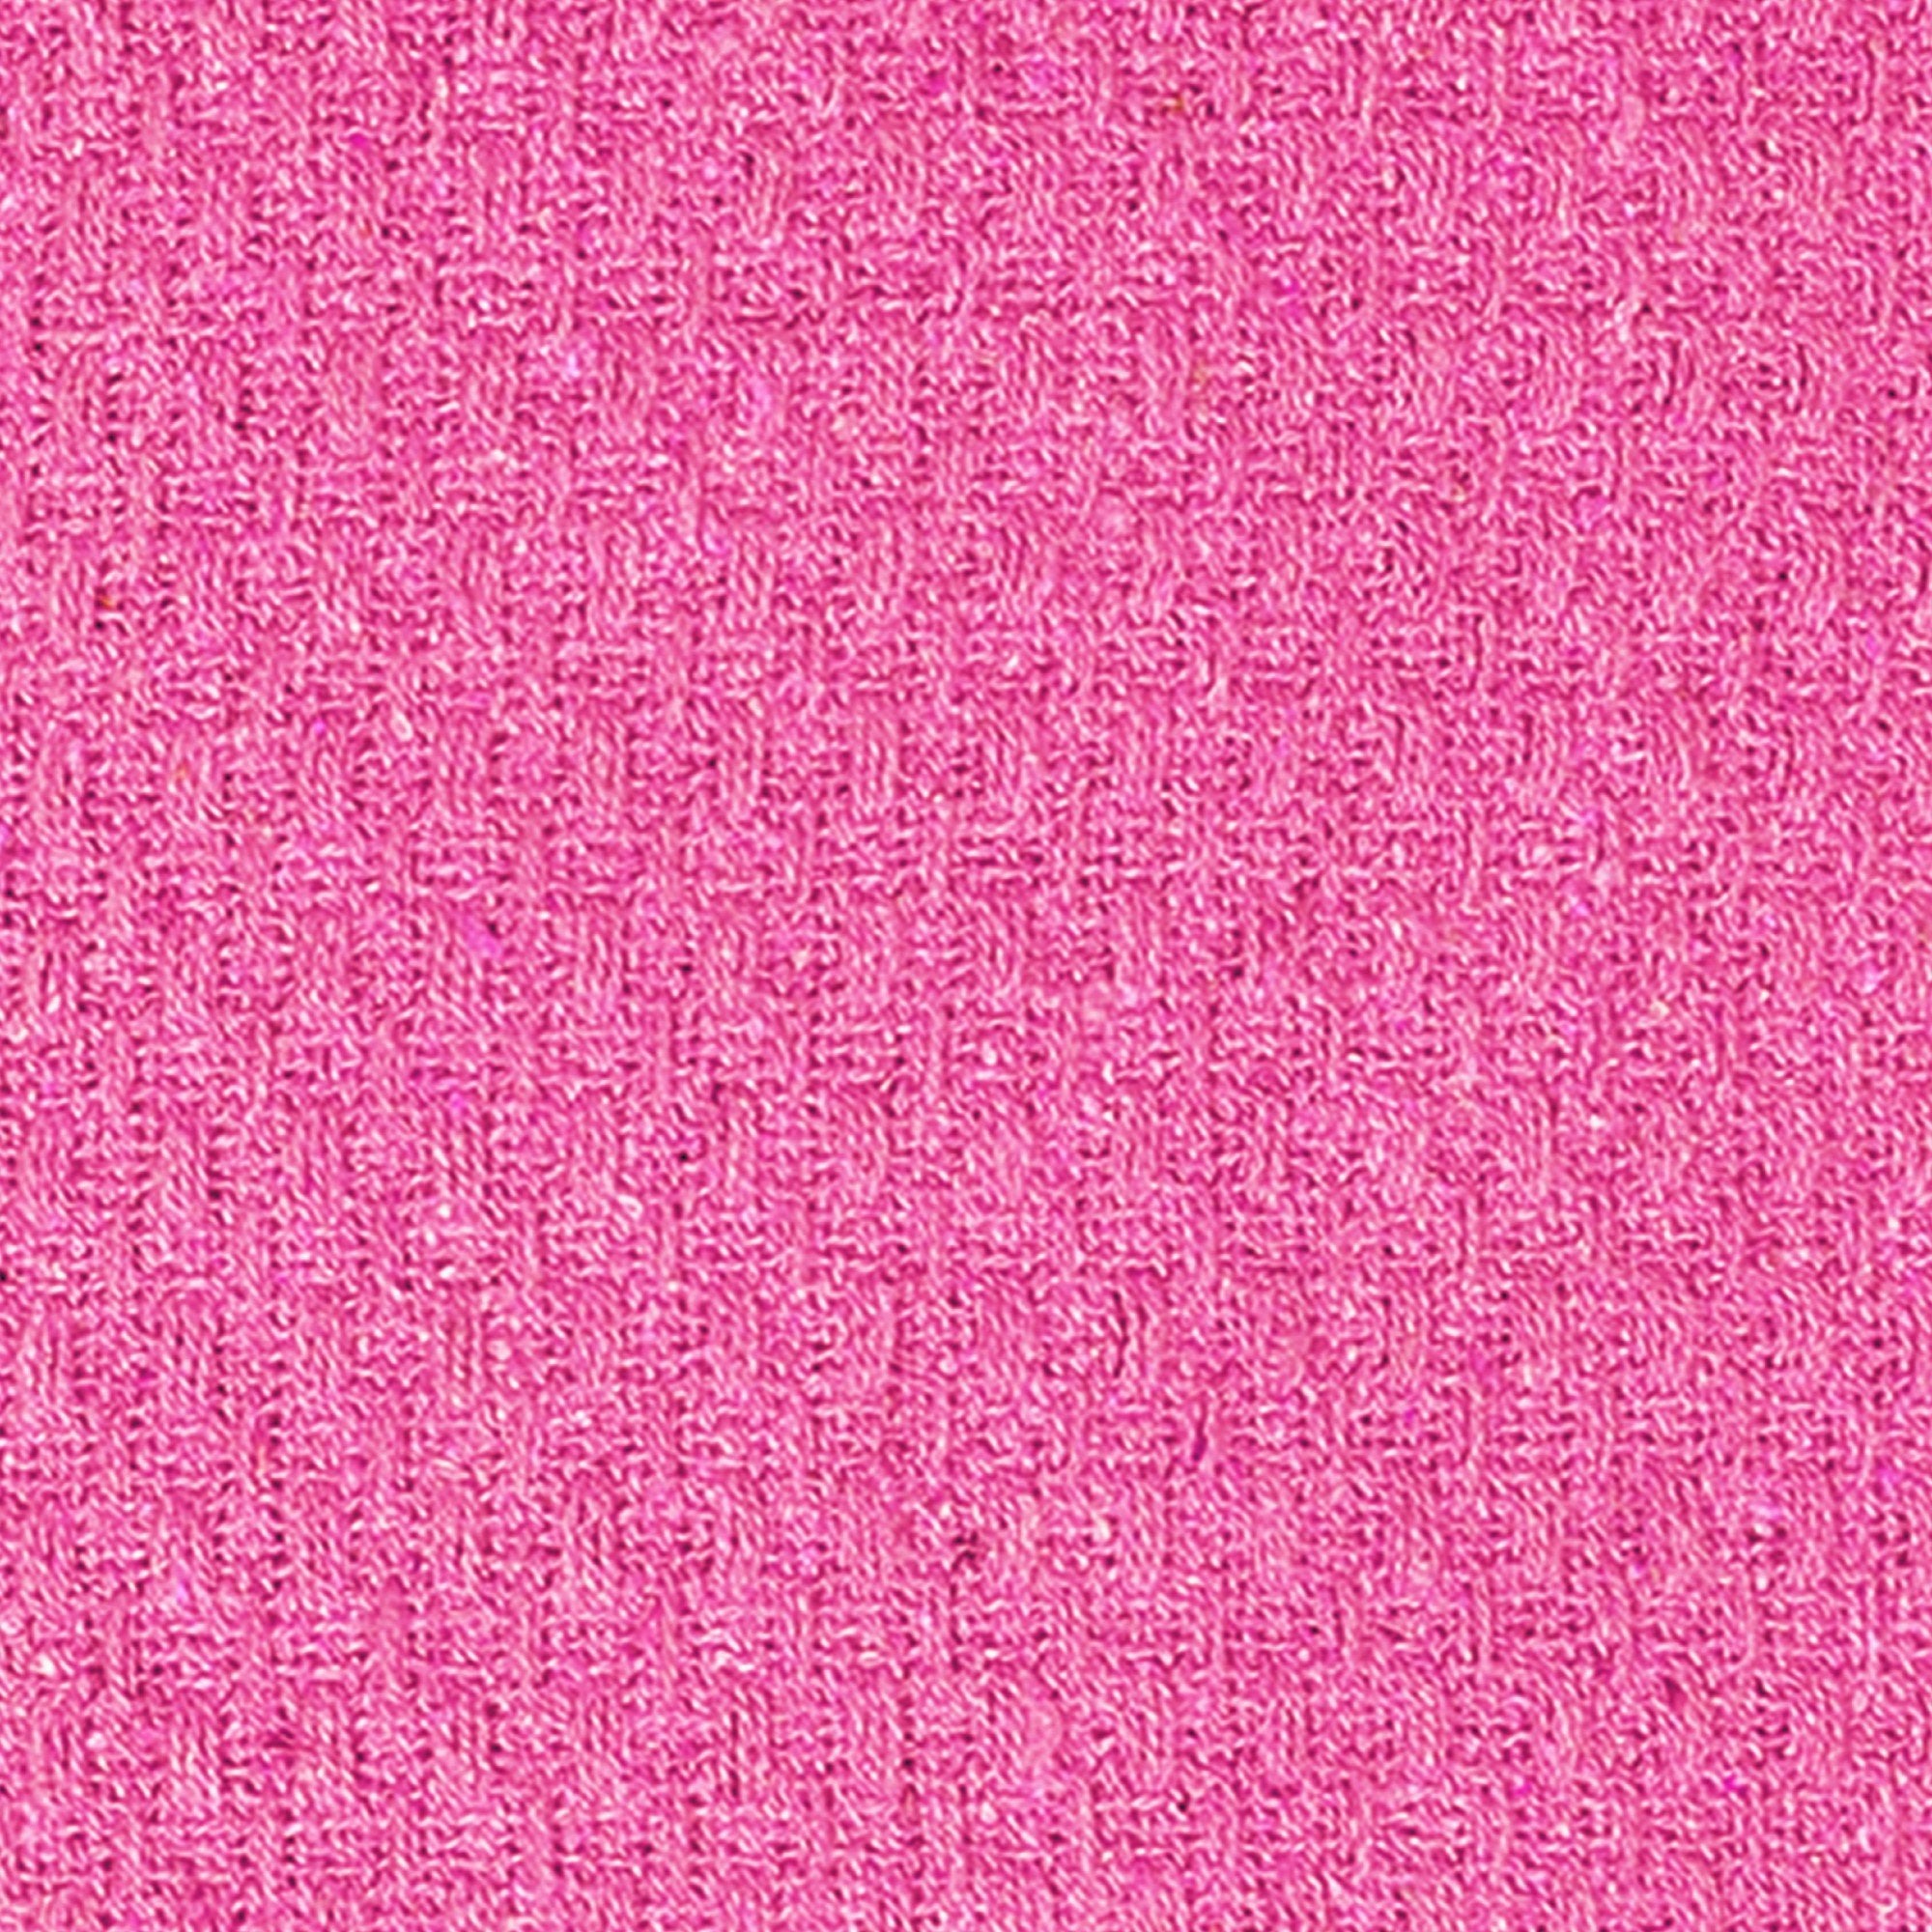 Cushion Hayden by Drift Home in Pink